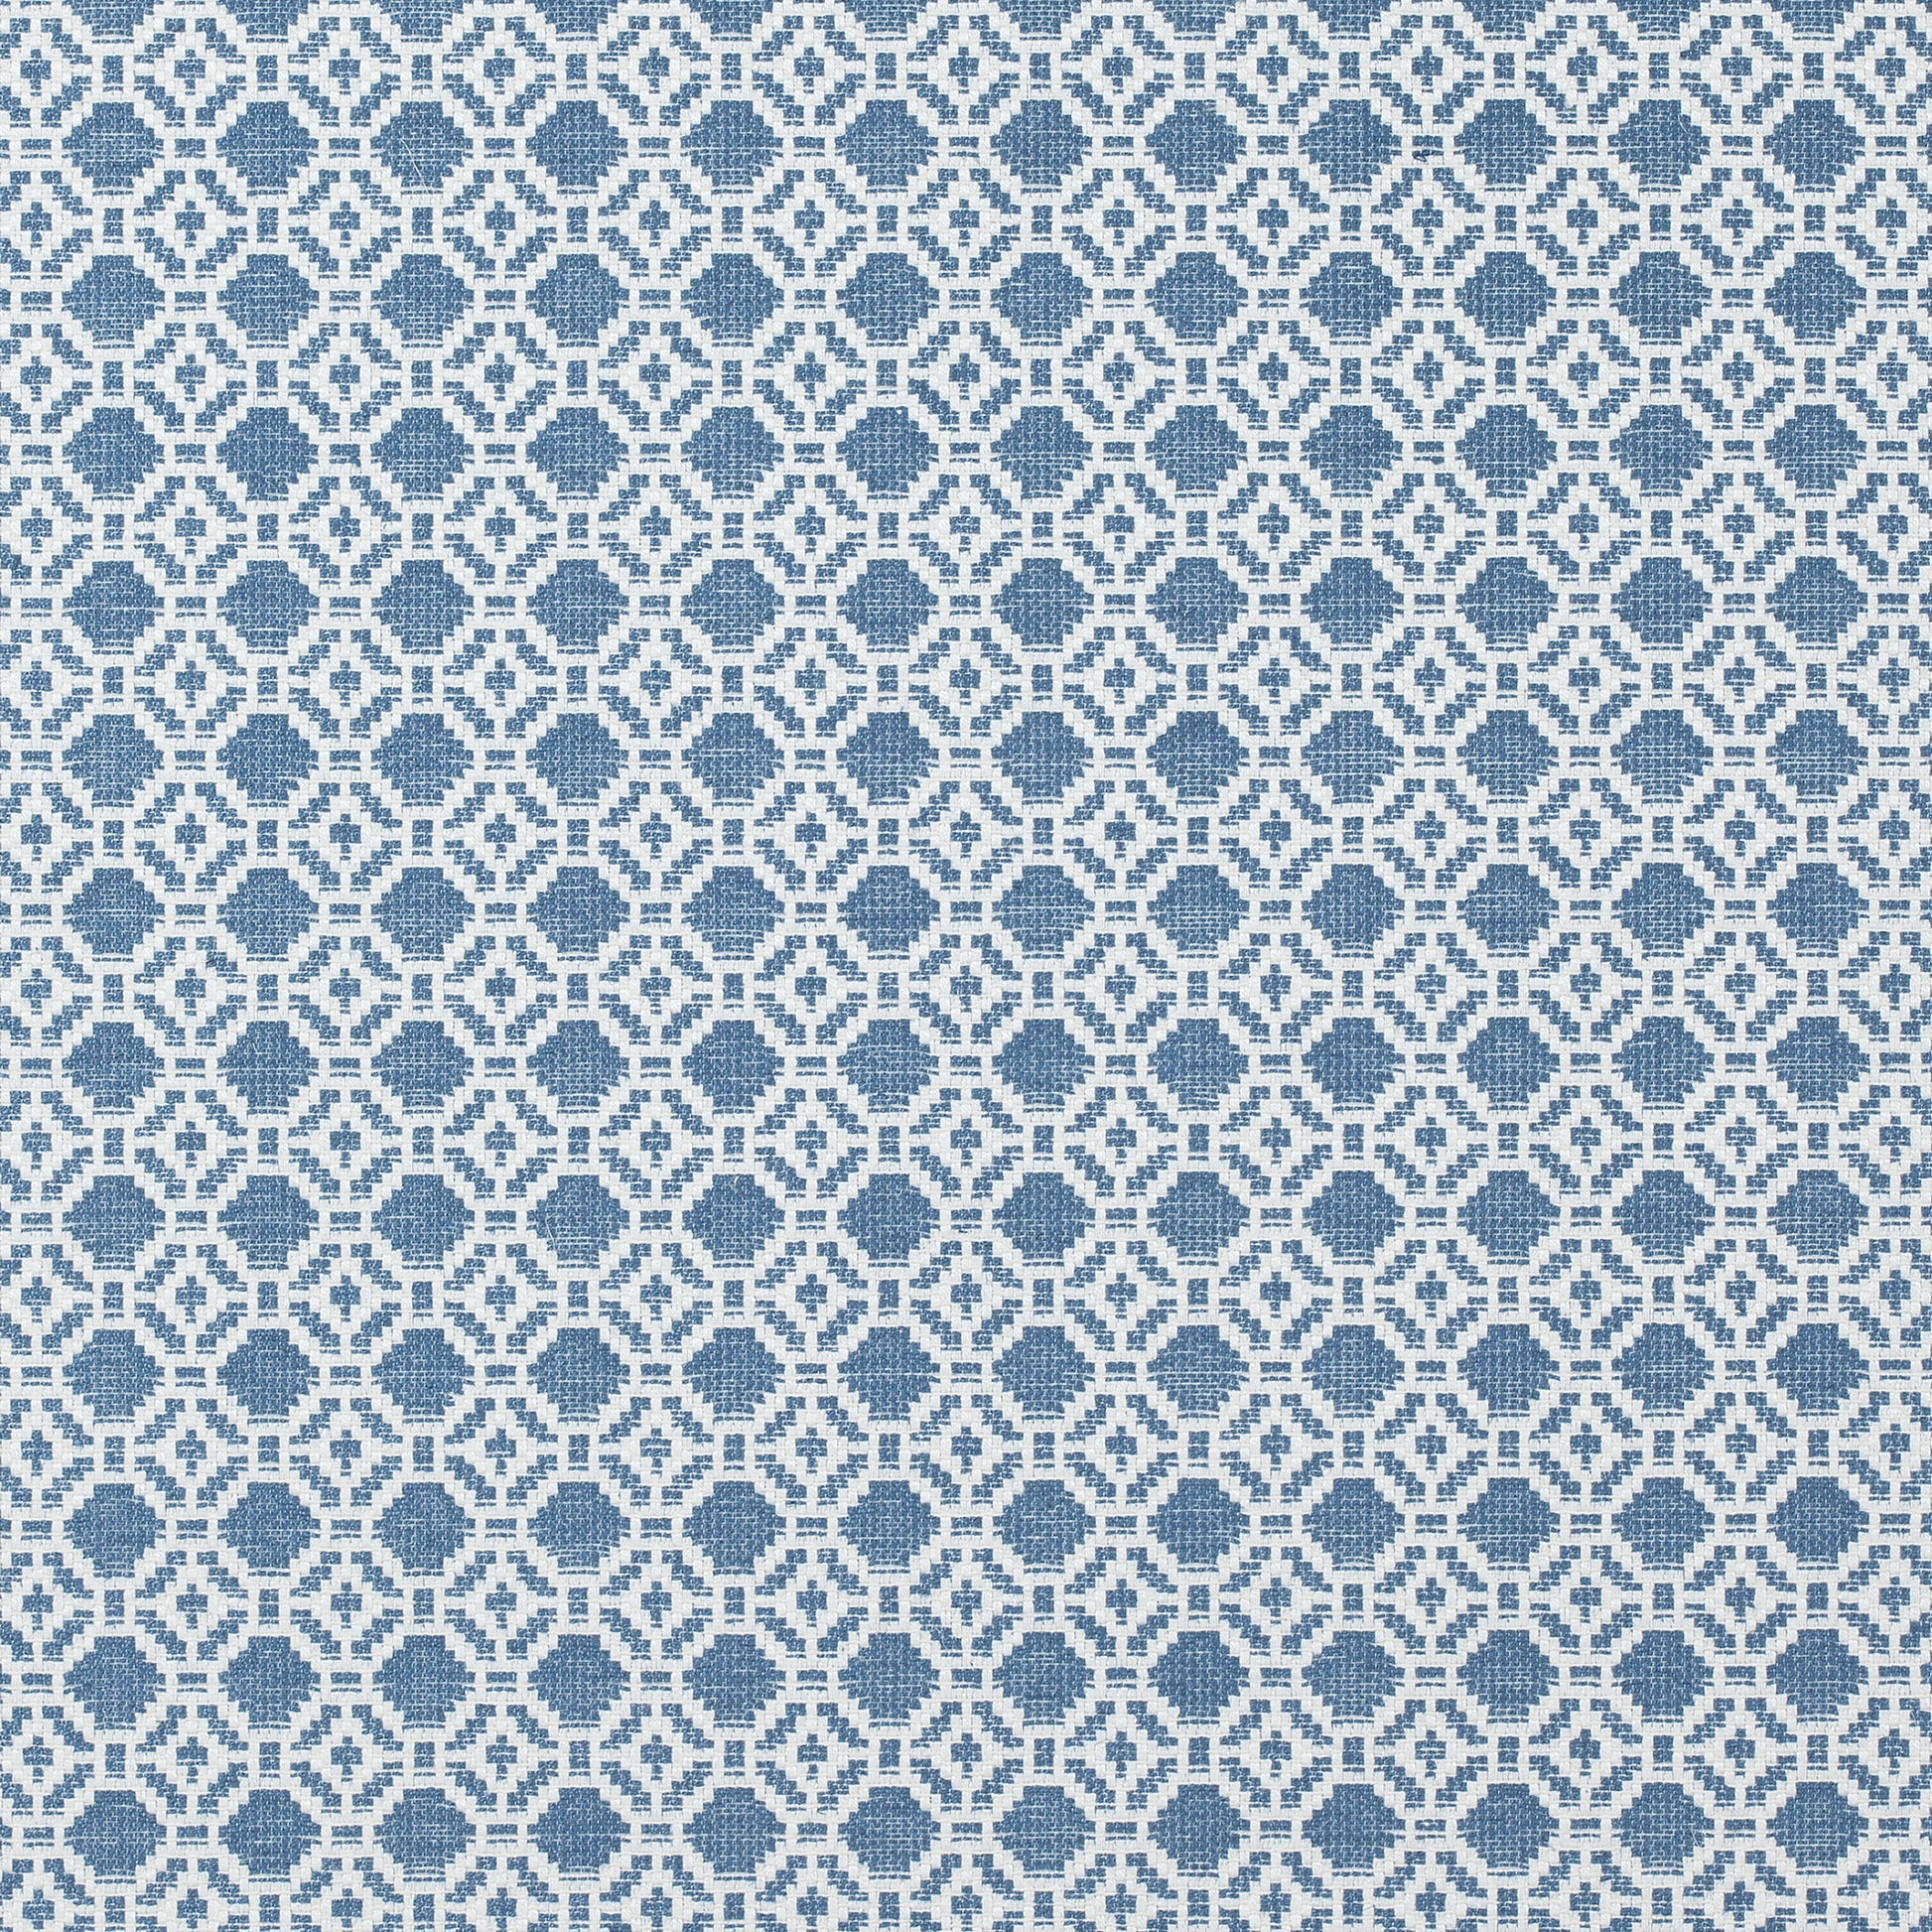 Purchase  Ann French Fabric Item# AW73039  pattern name  Amalfi